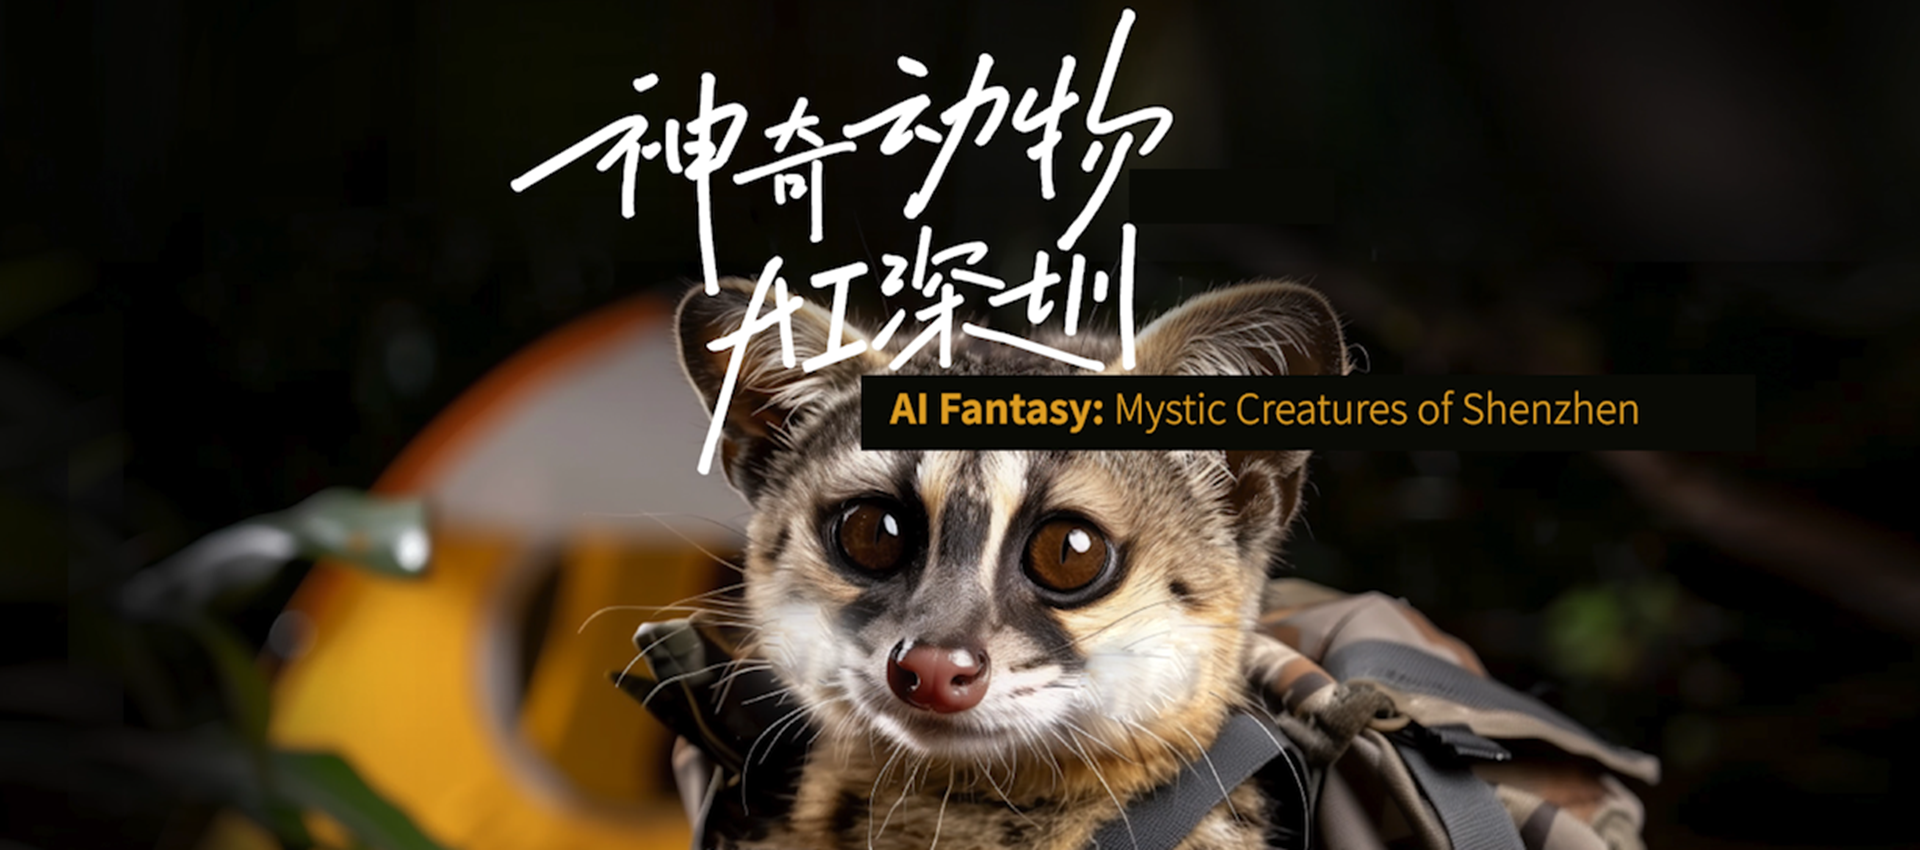 AI fantasy: Mystic creatures of Shenzhen